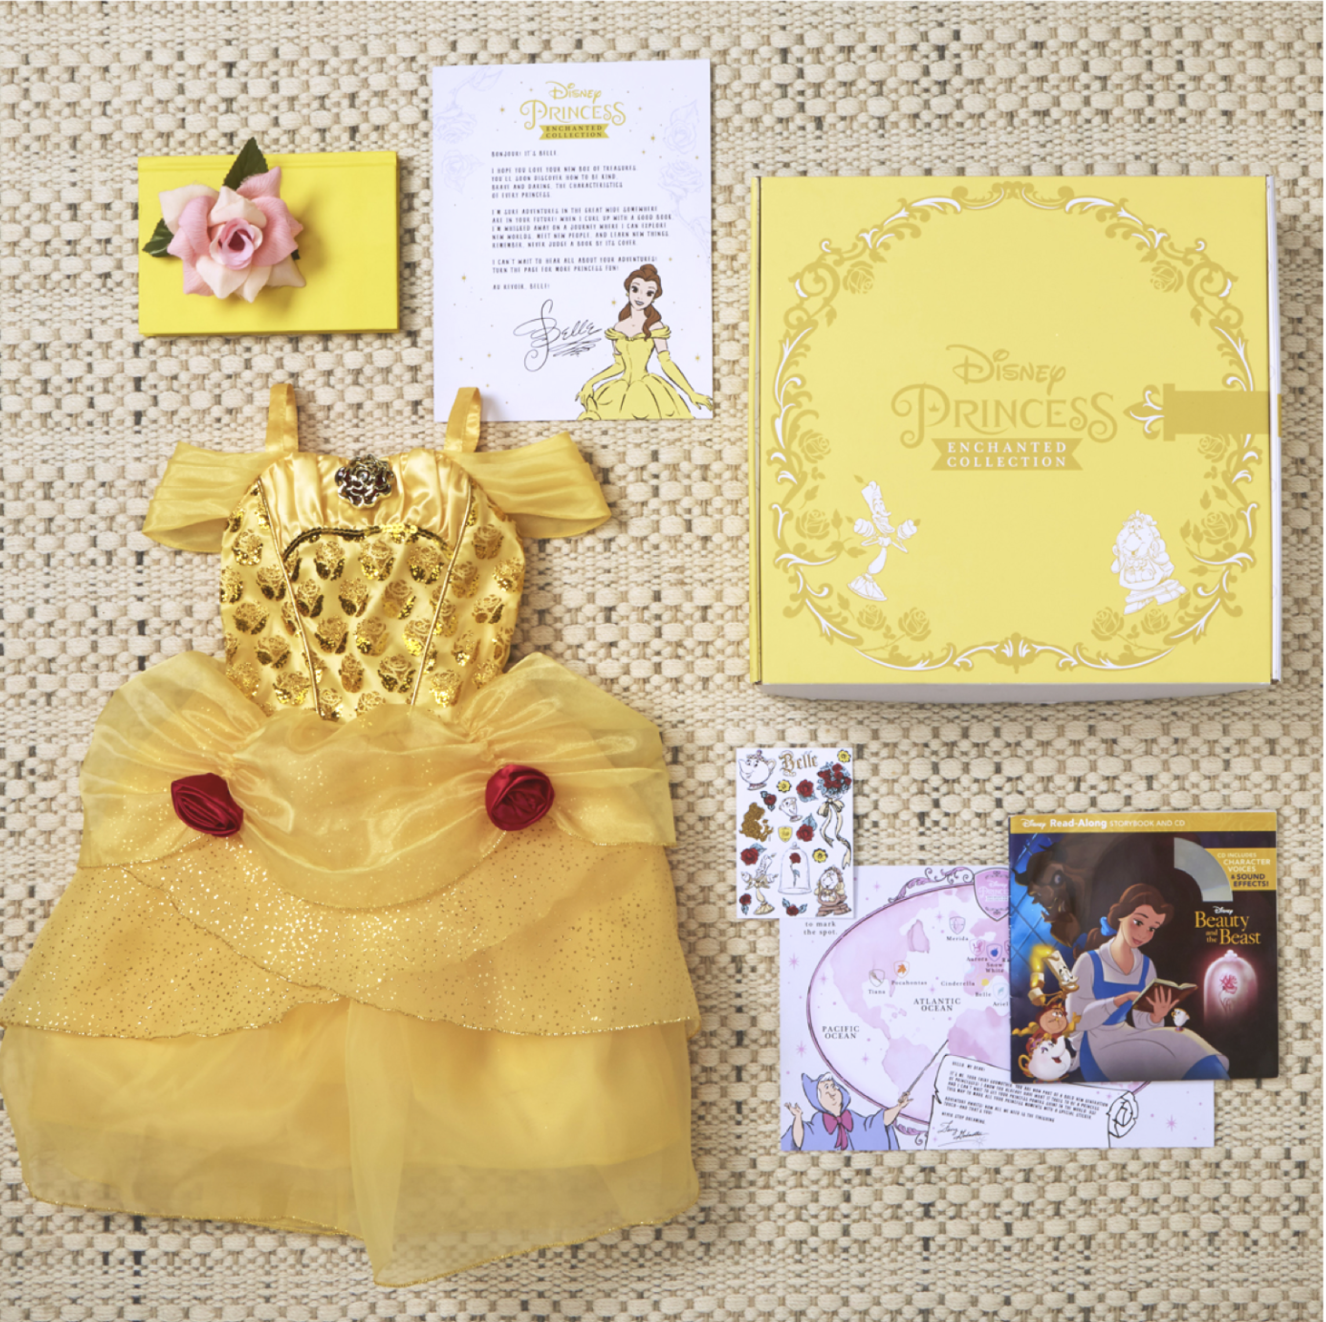 Disney Princess Enchanted Collection